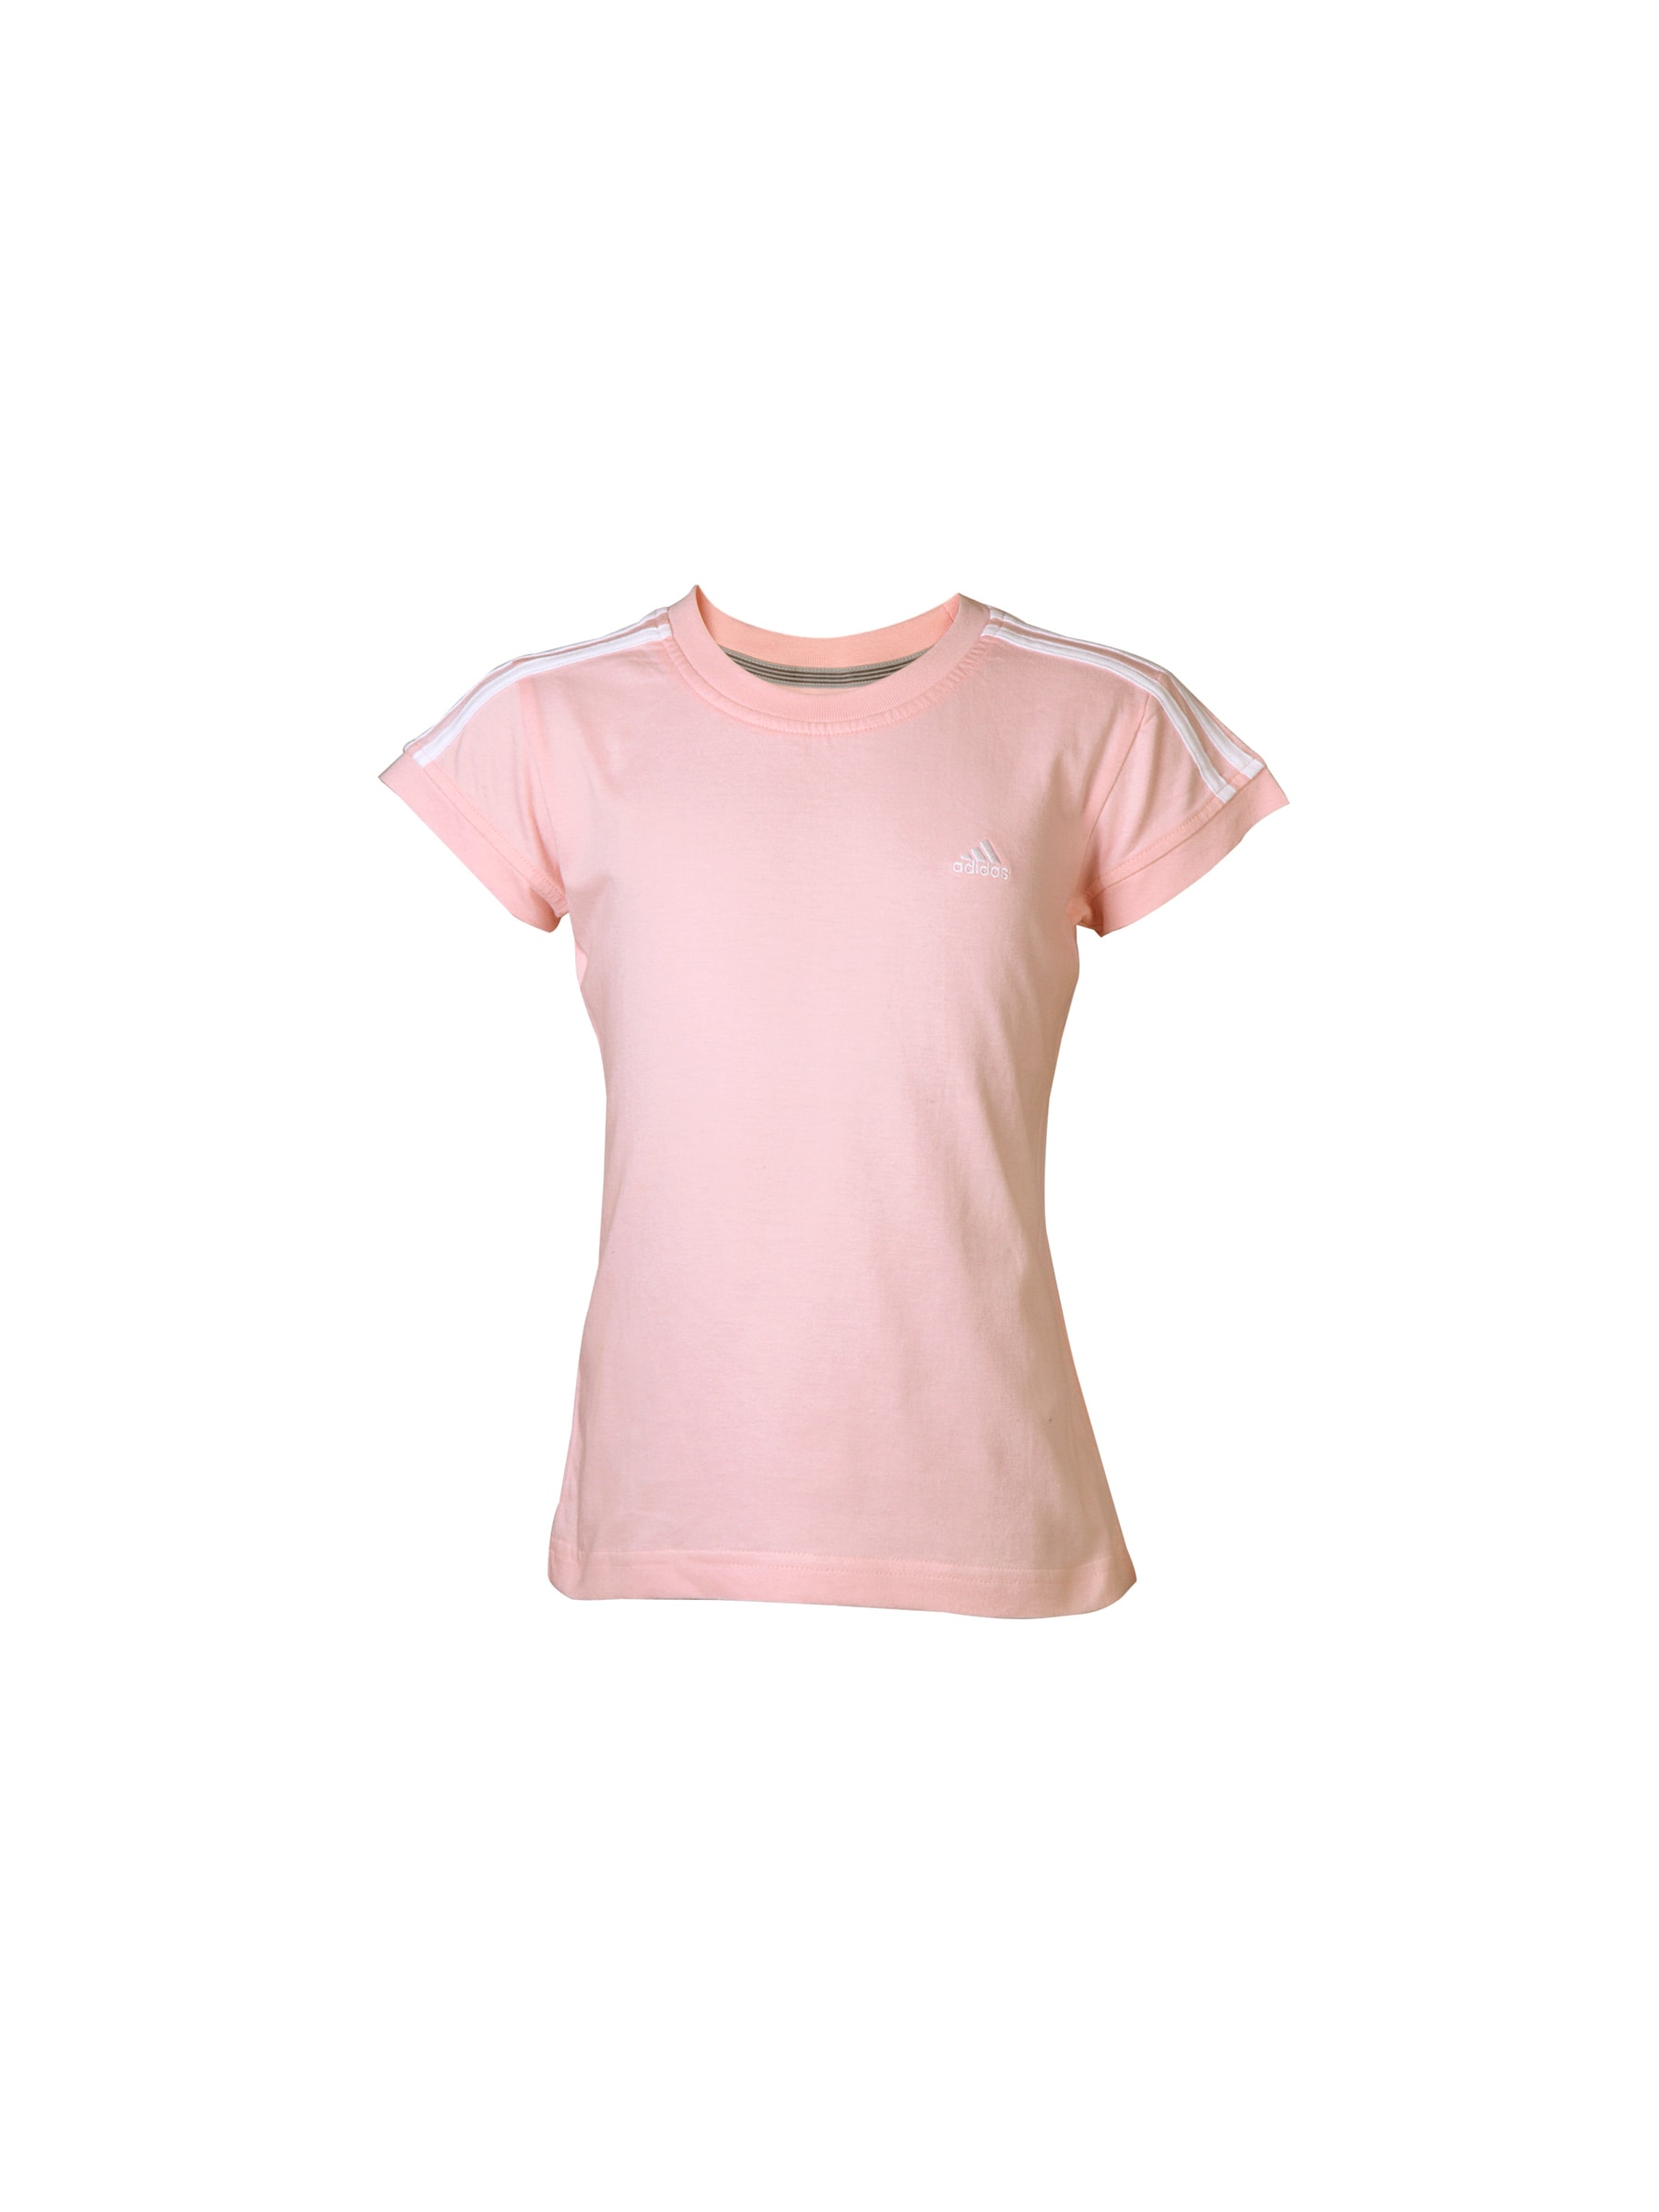 ADIDAS Kids Unisex YG 3S Core Ess Pink T-Shirt